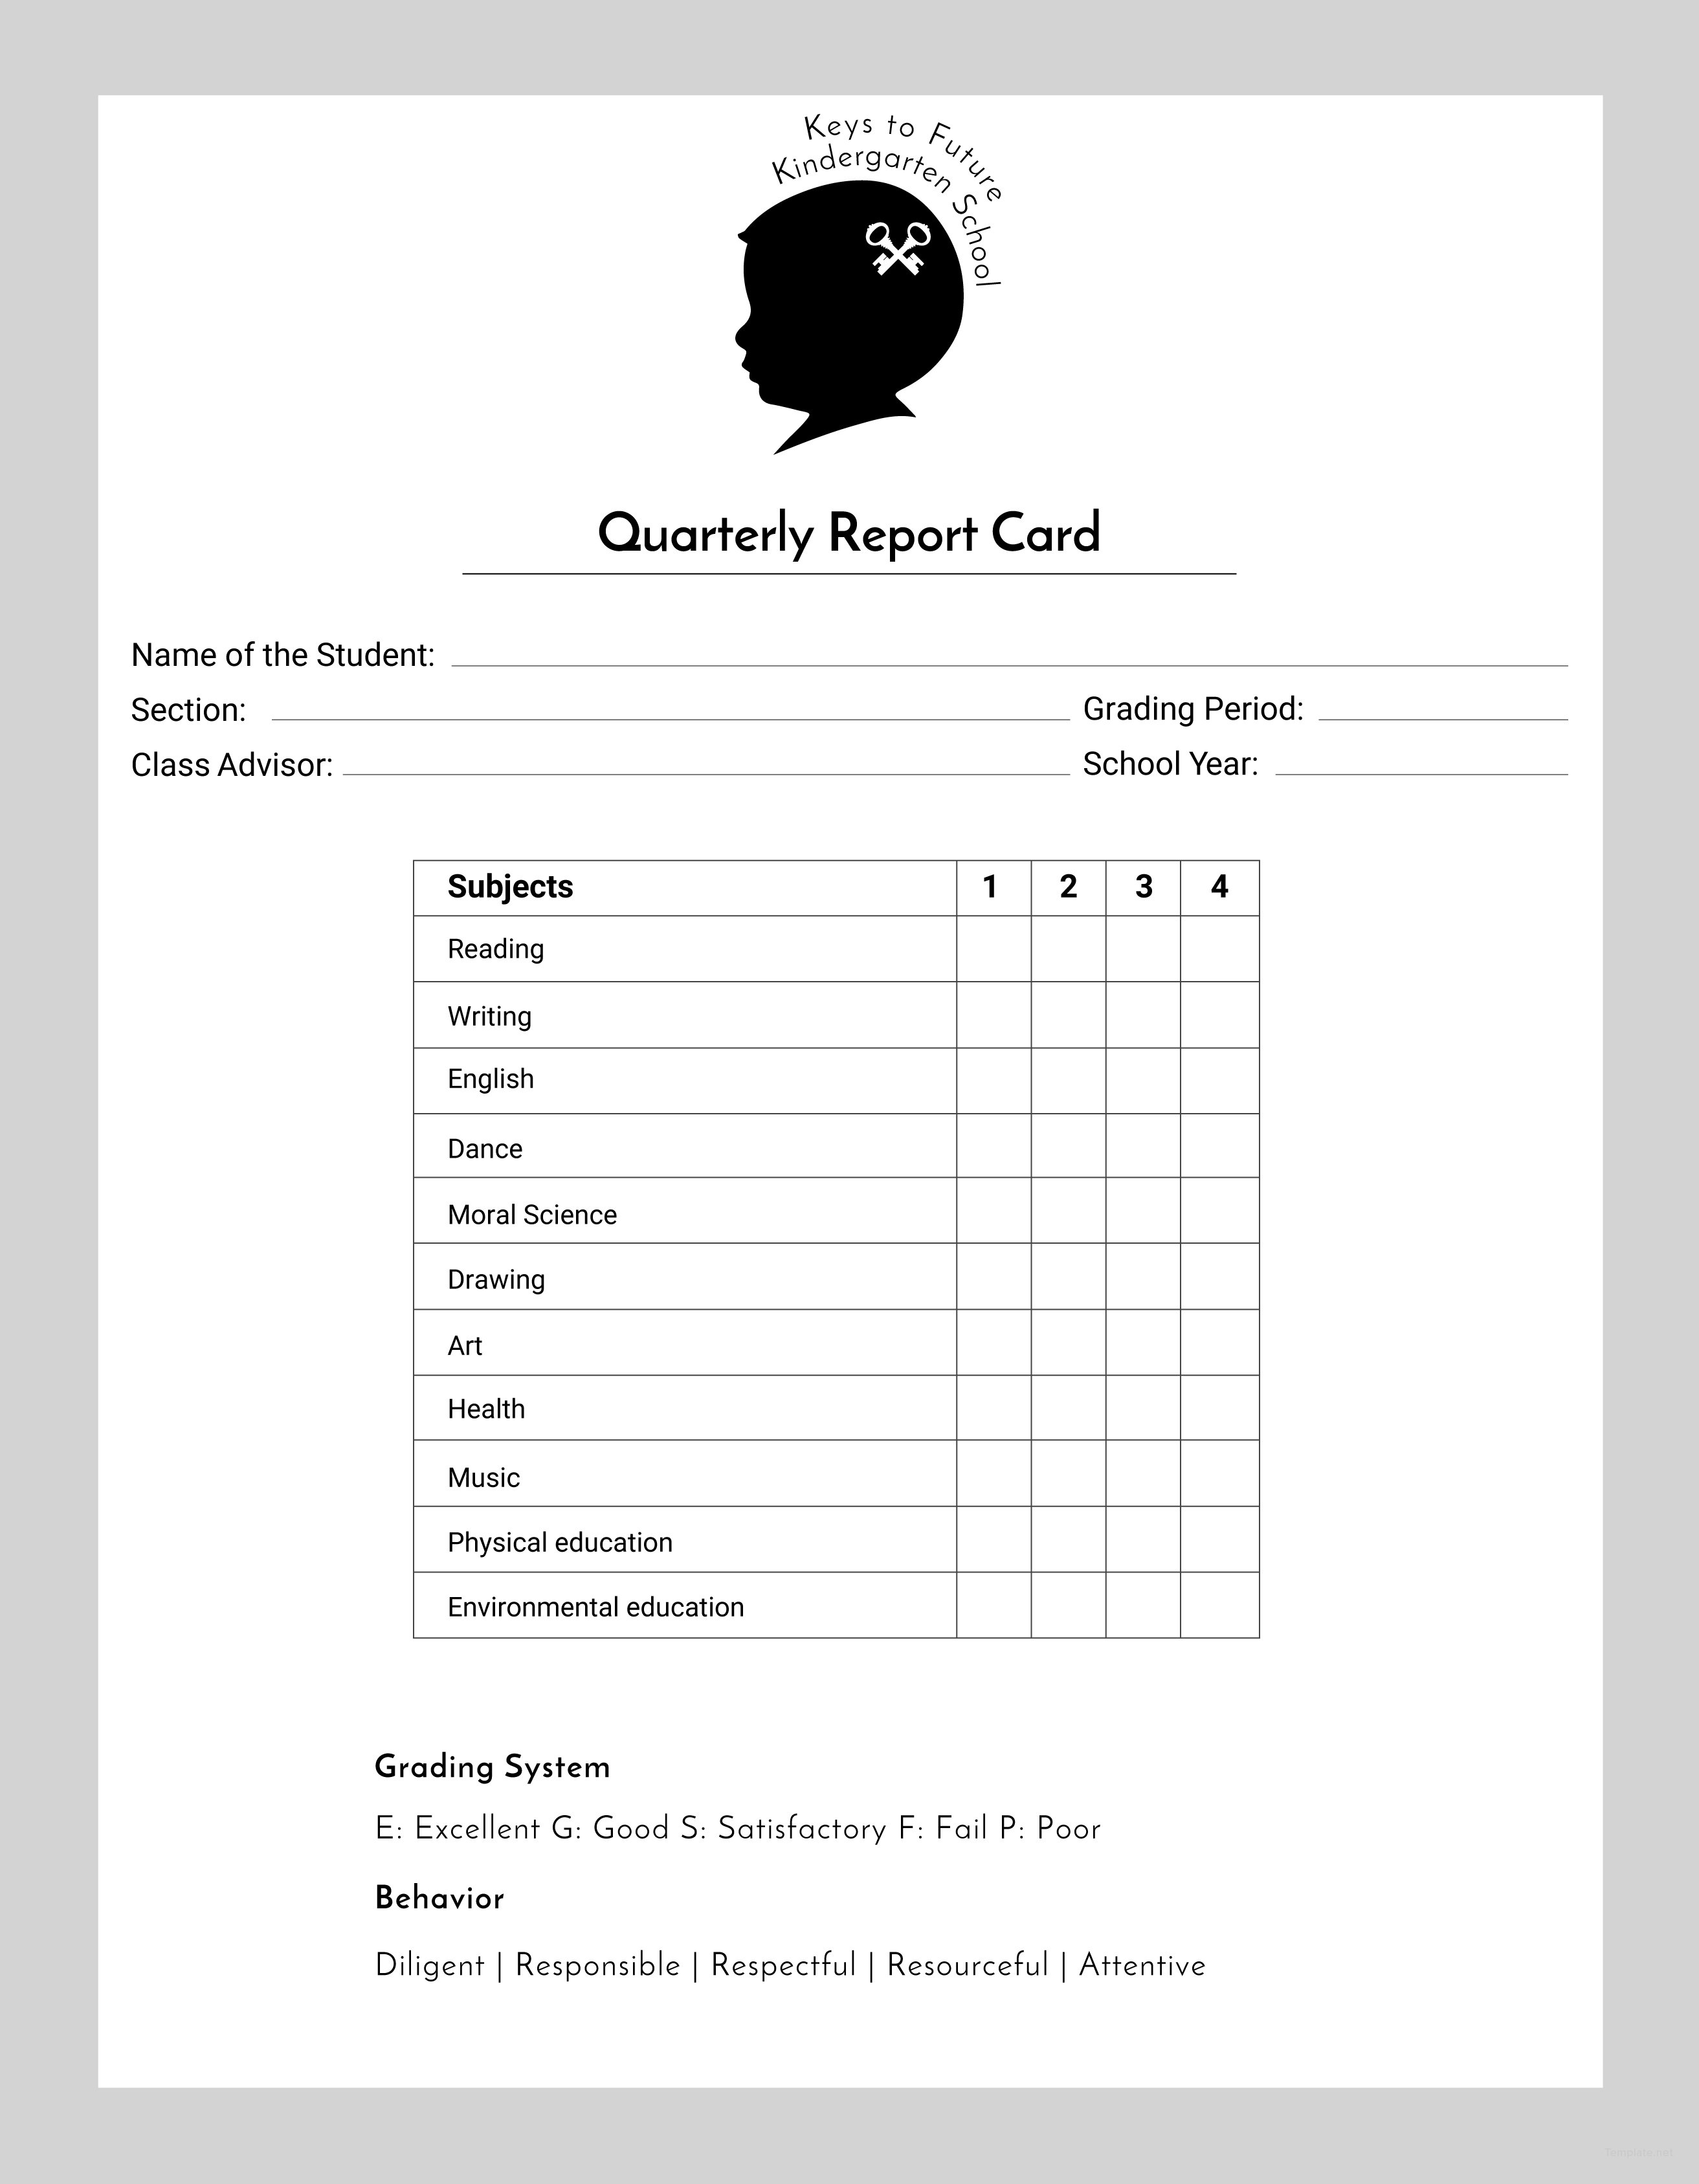 Free Kindergarten Report Card Template in Adobe Illustrator